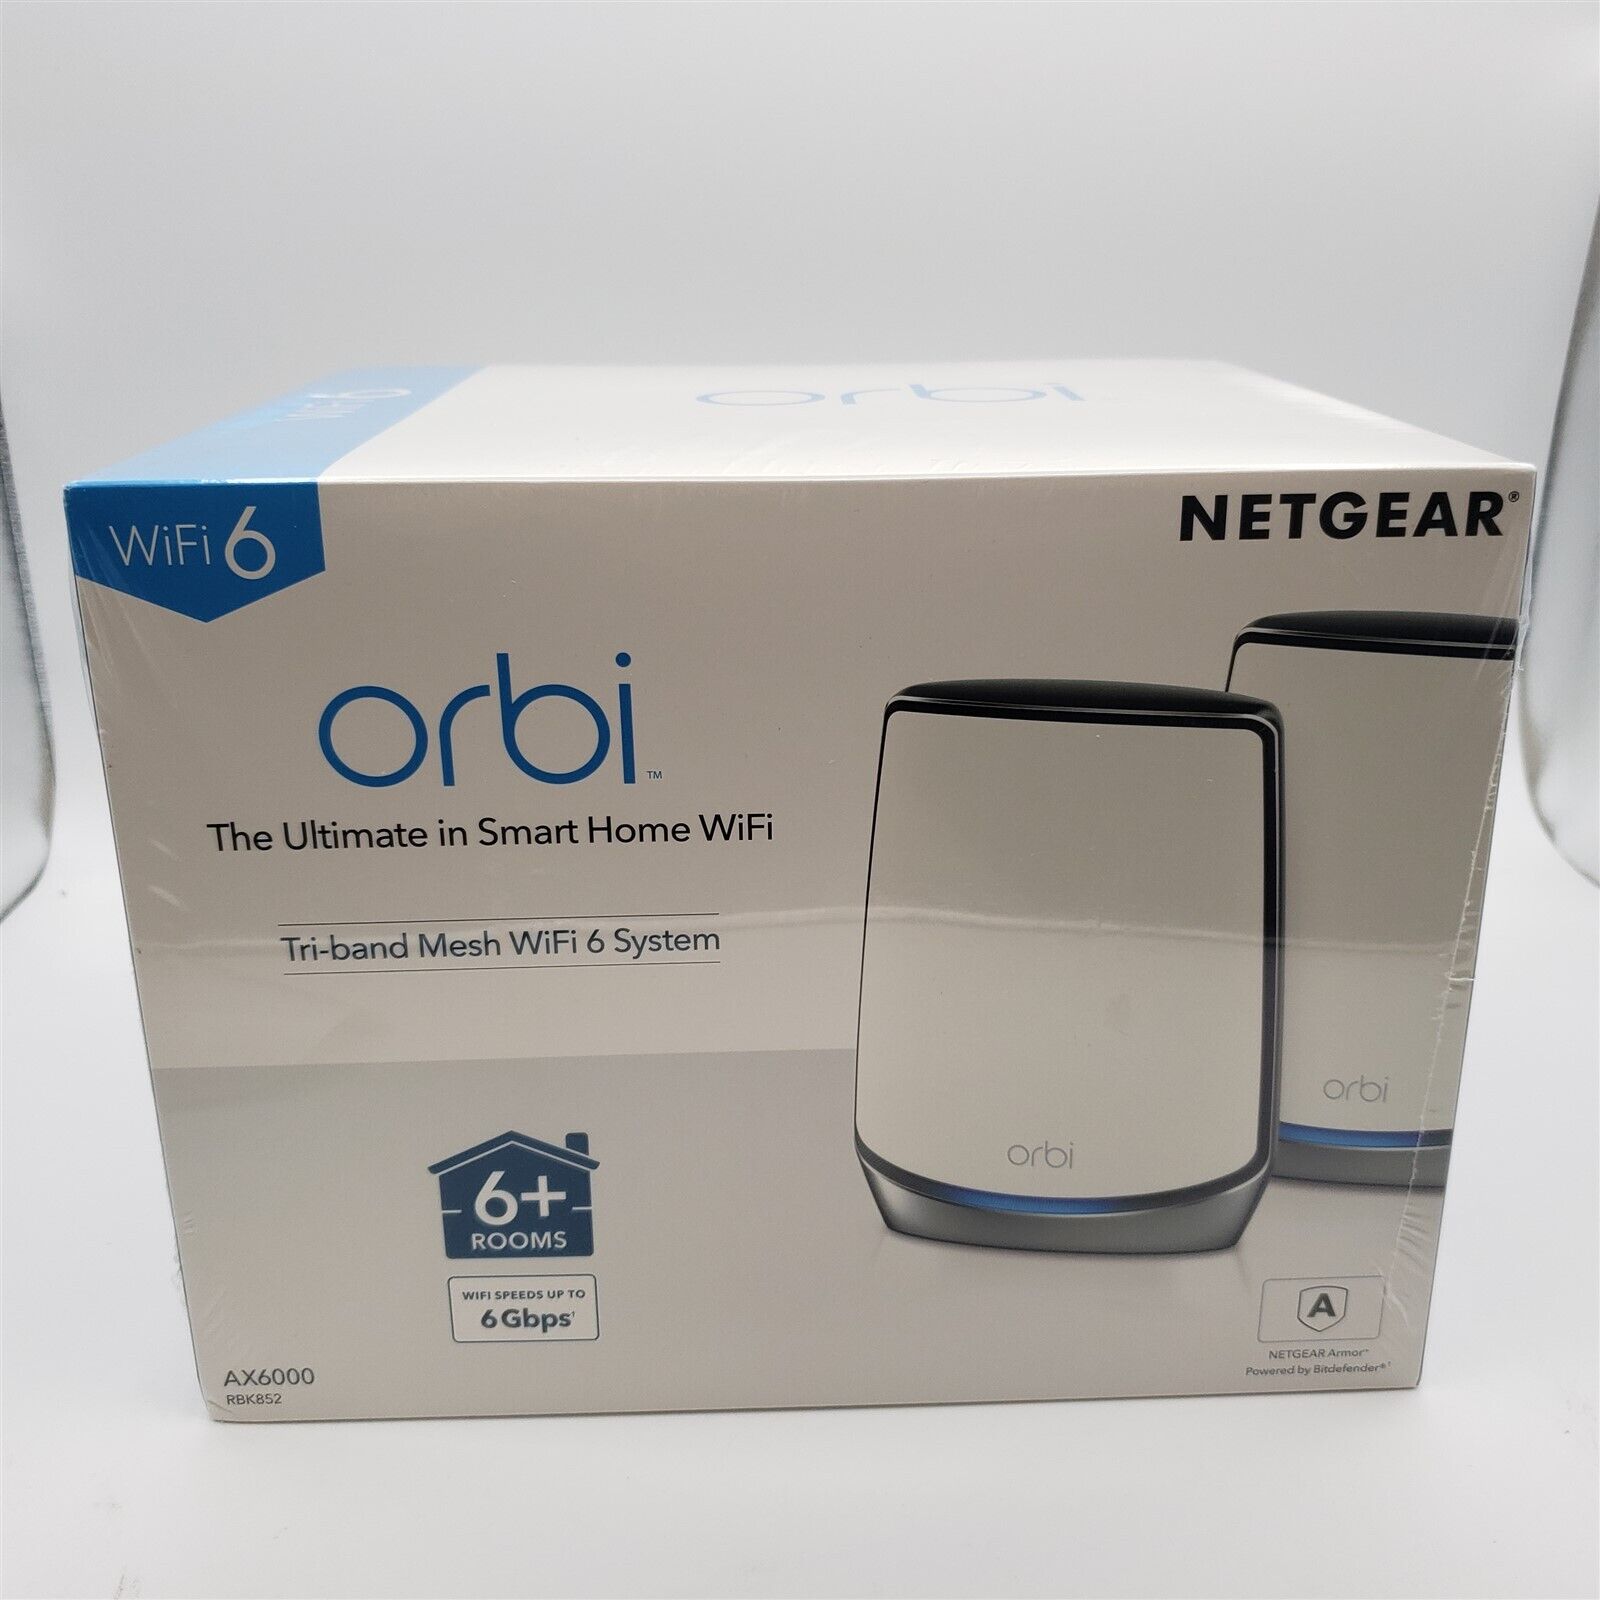 -NEW- NETGEAR Orbi Whole Home Tri-Band Mesh WiFi 6 System (RBK852)